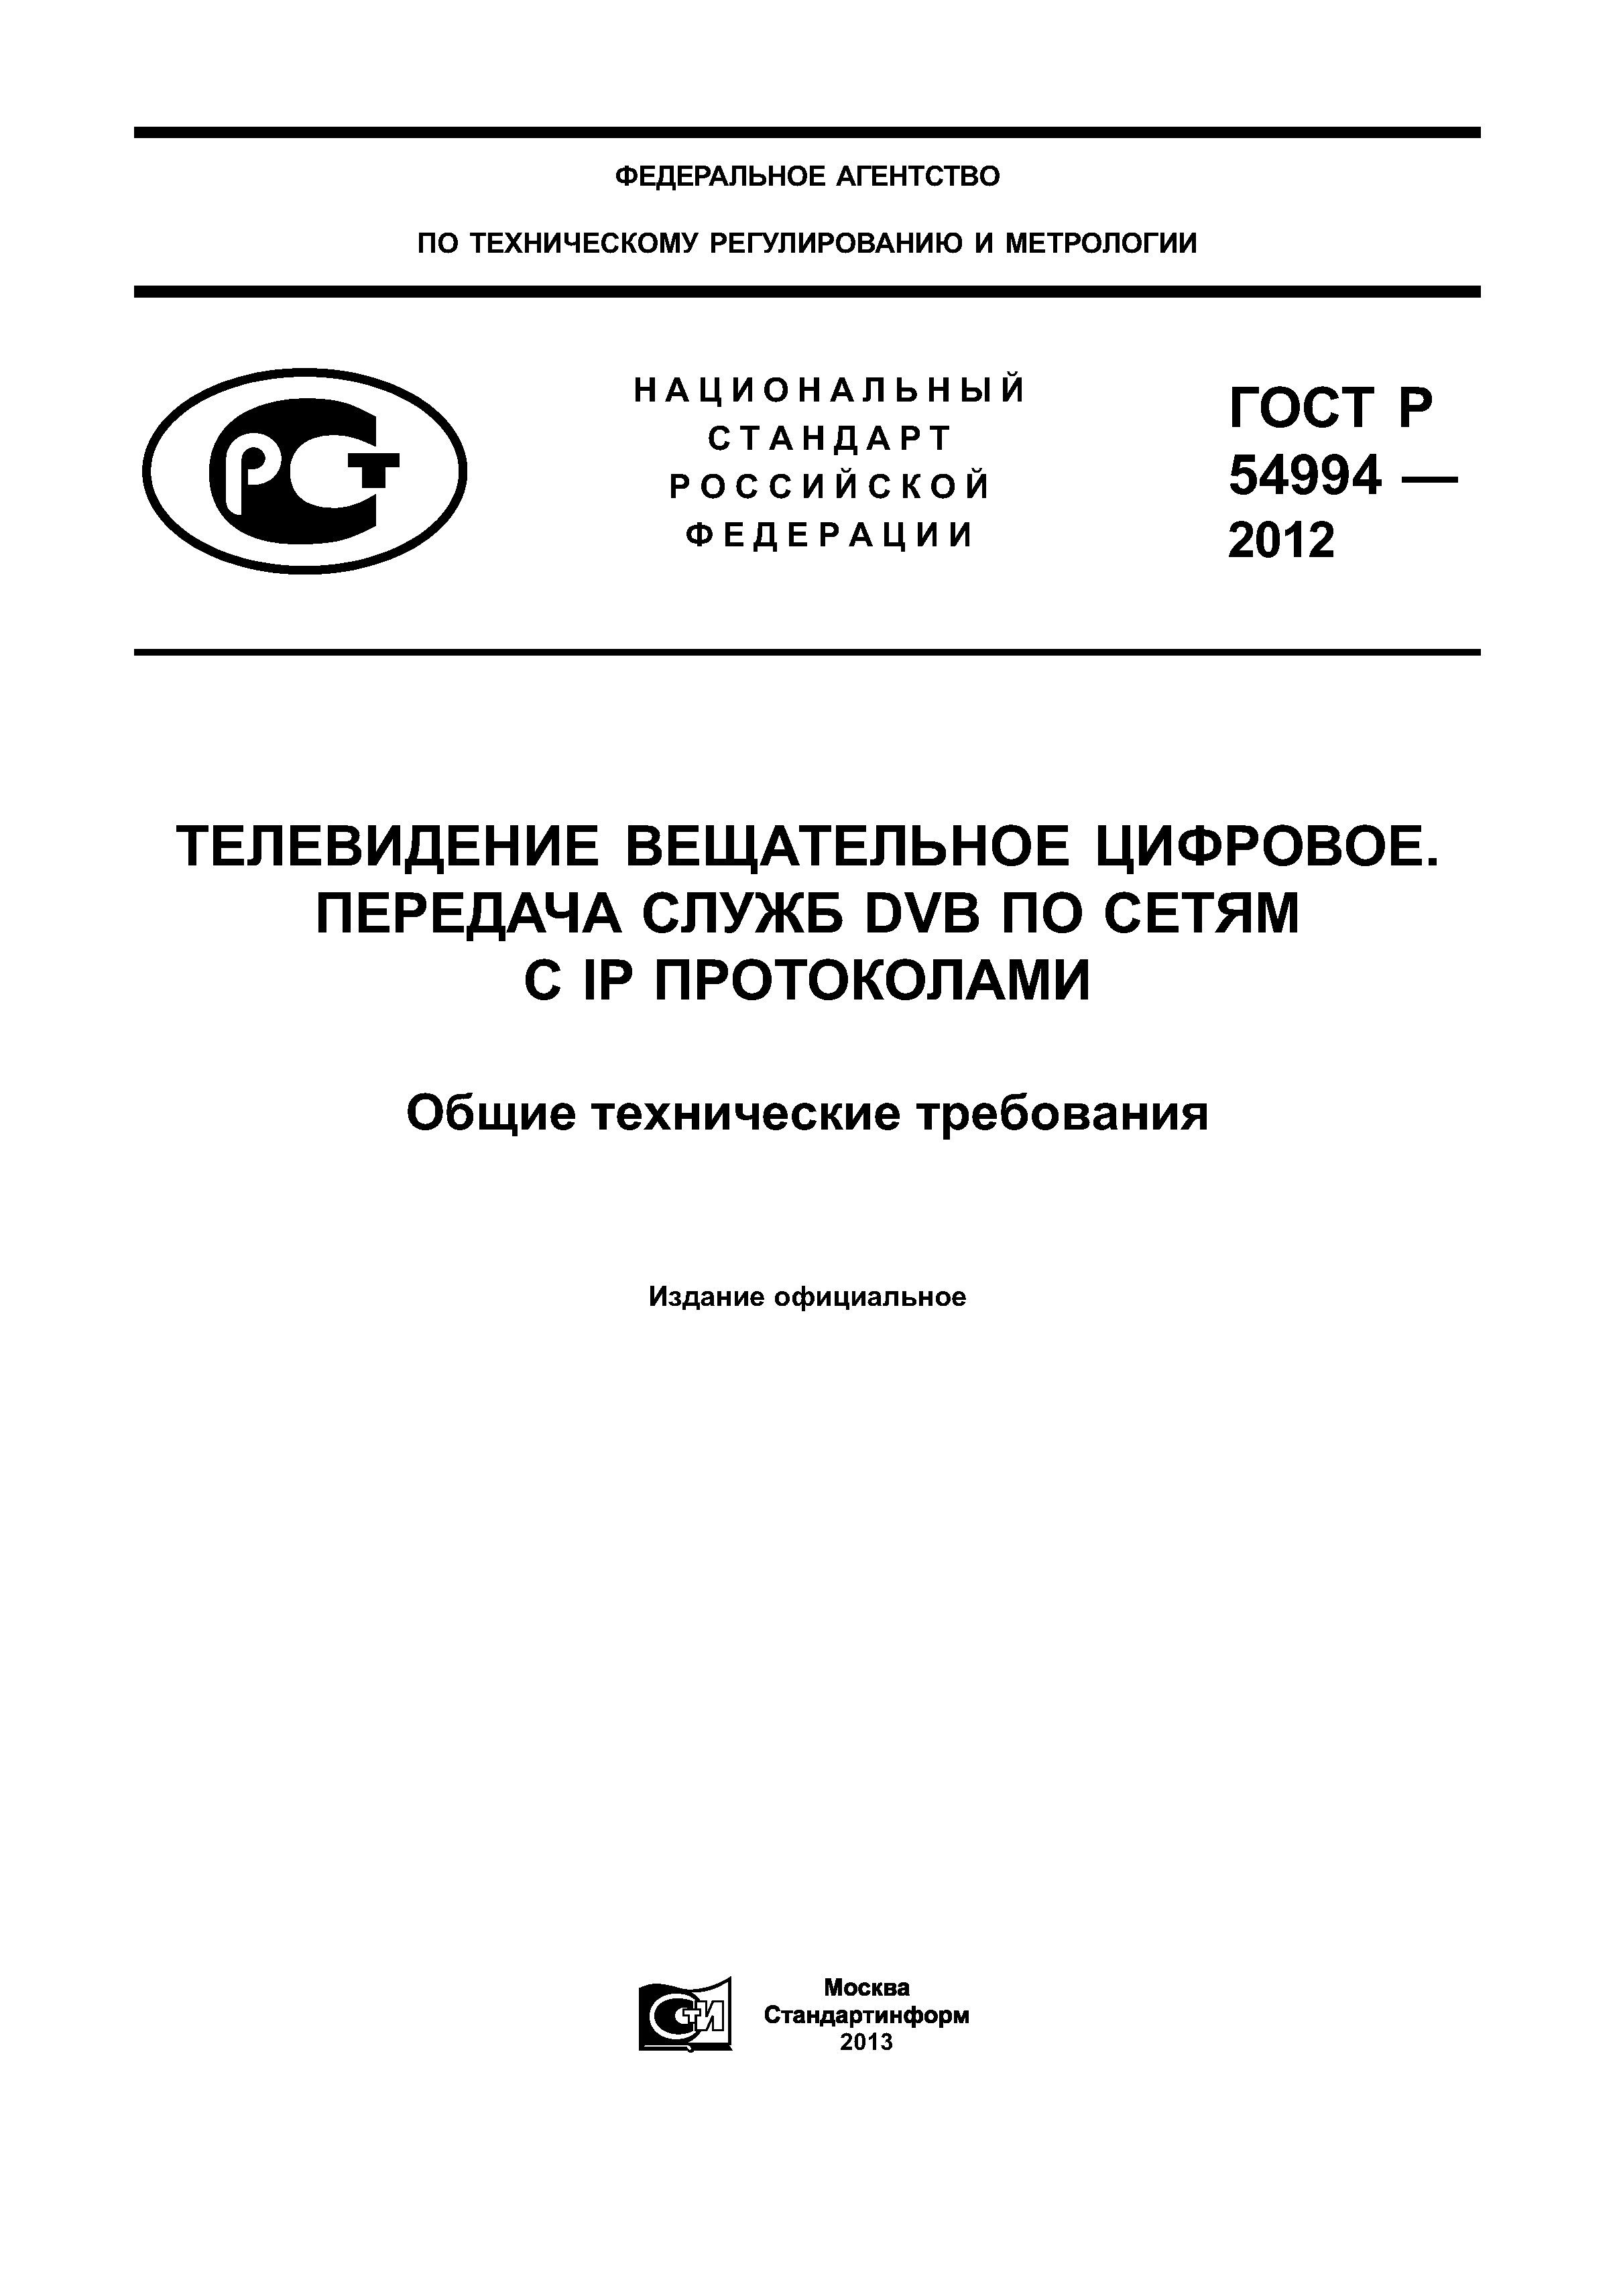 ГОСТ Р 54994-2012